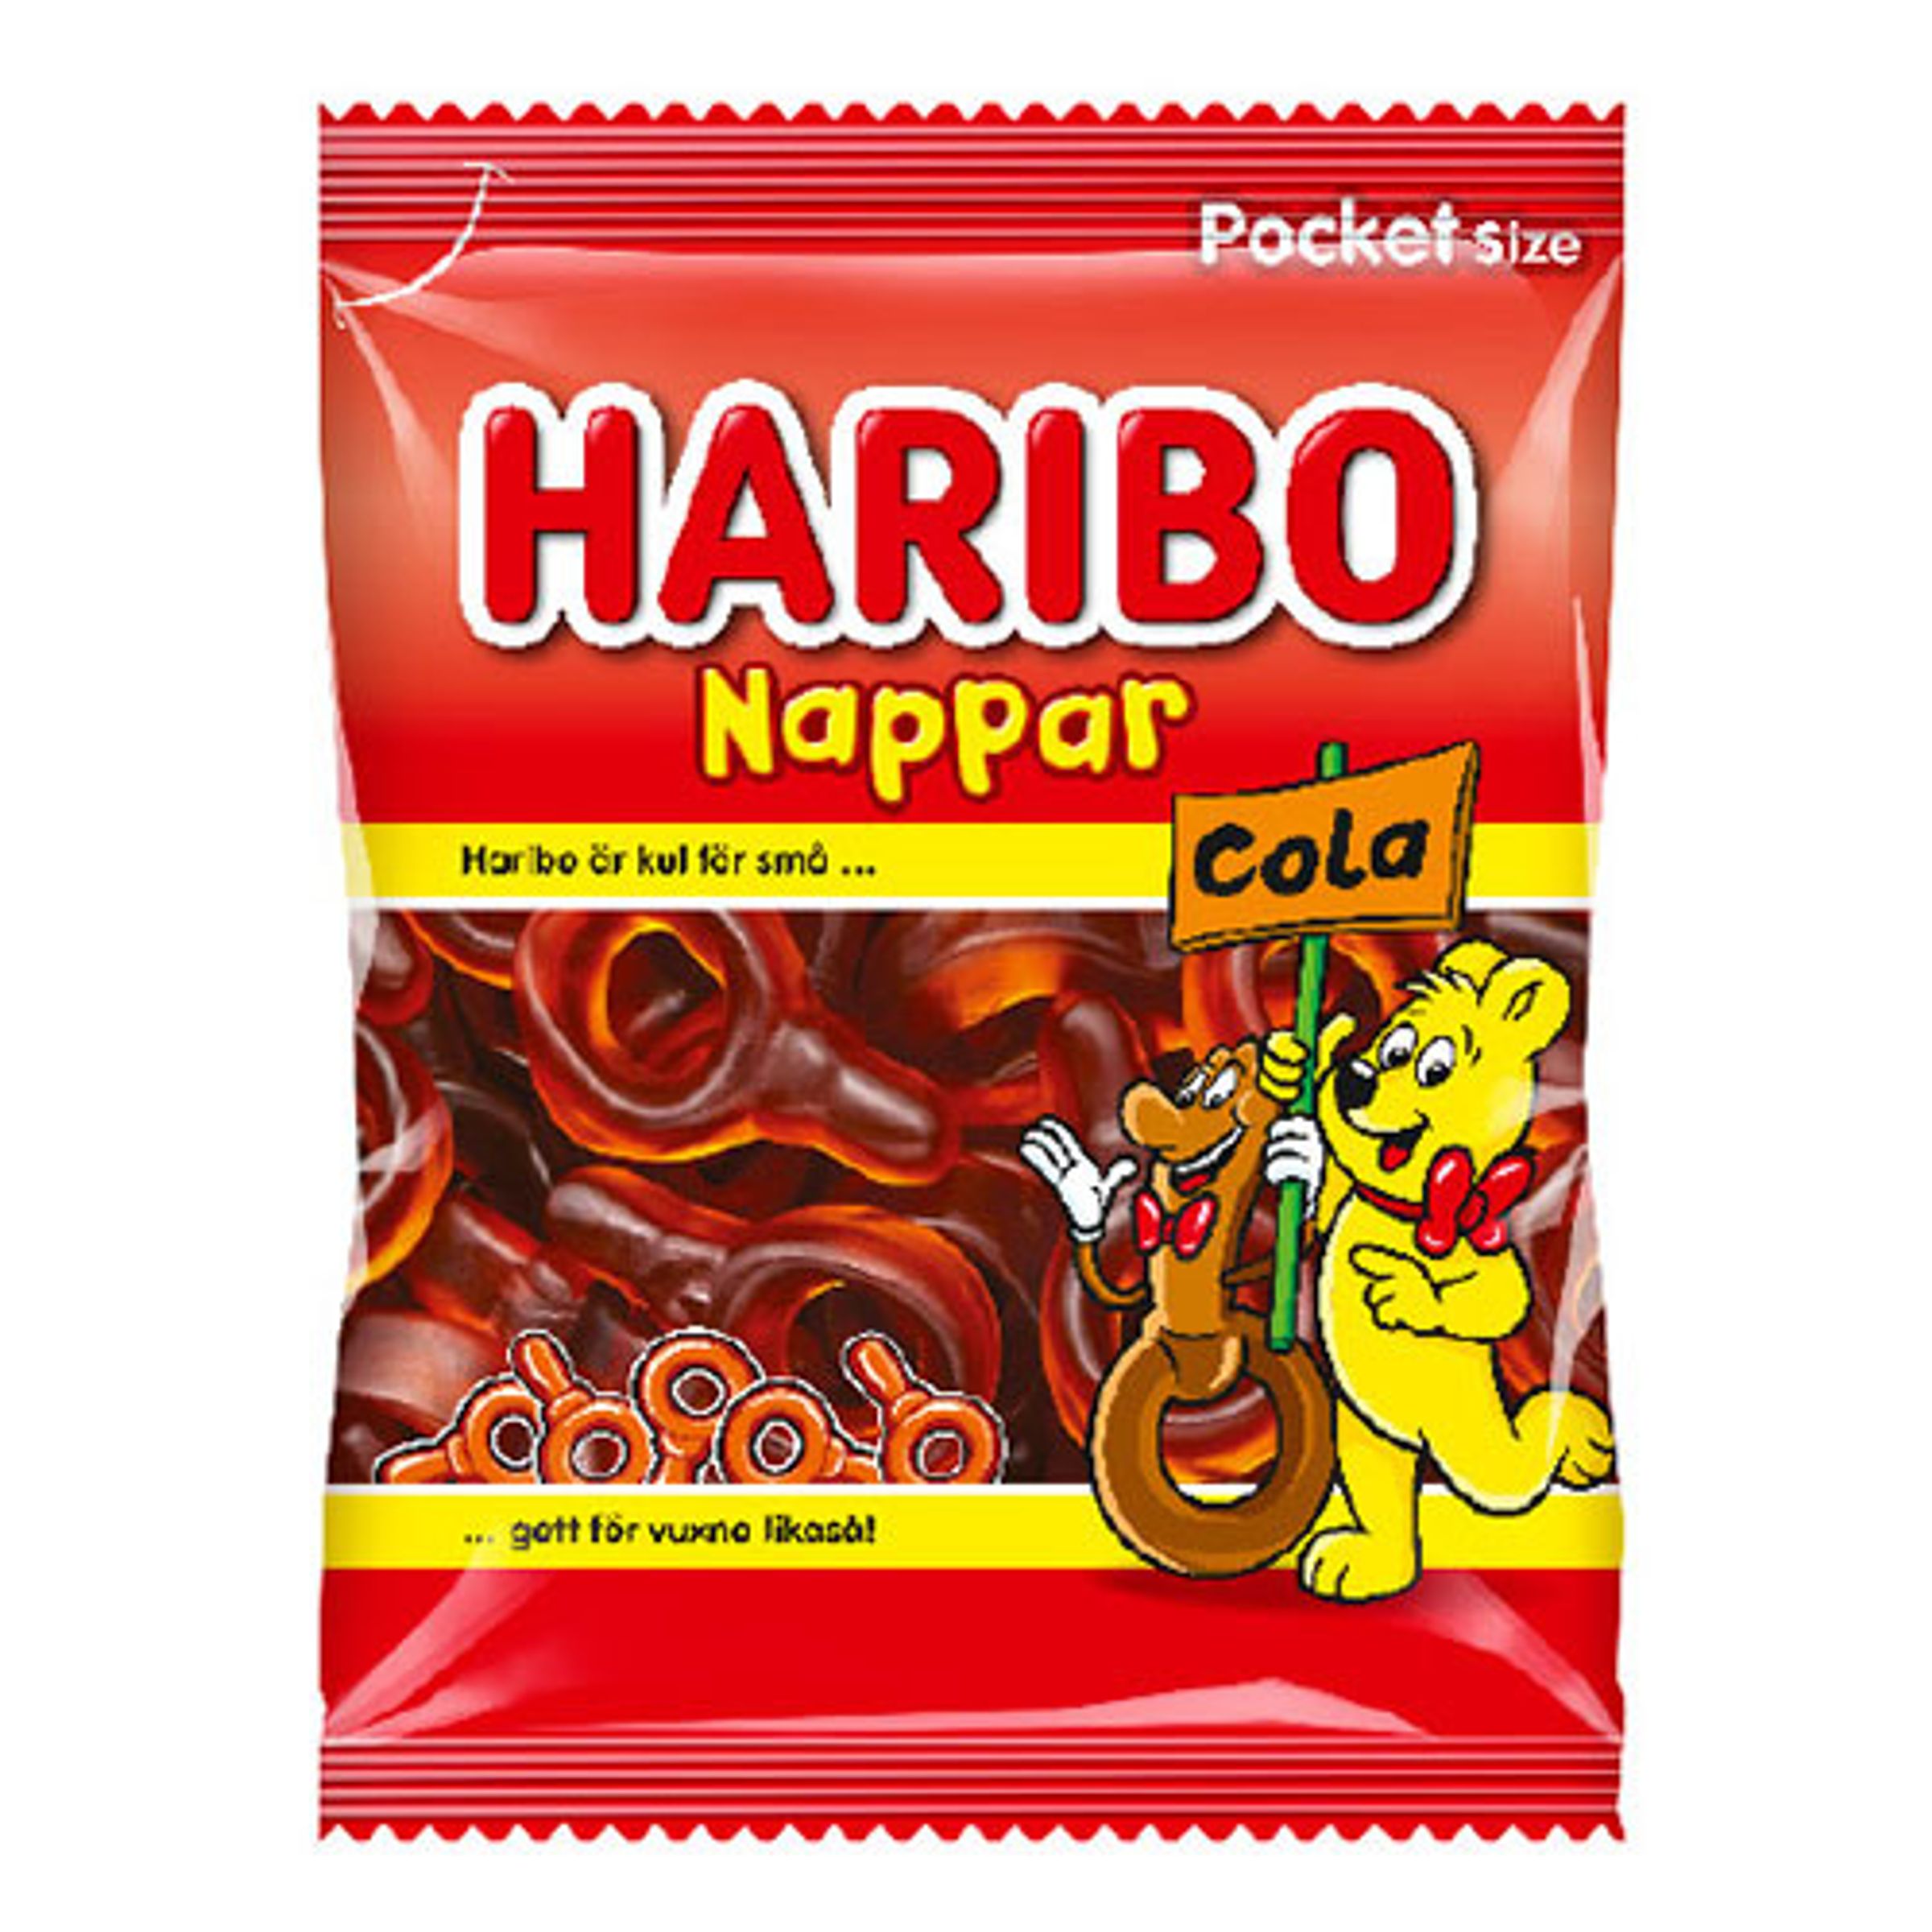 Haribo Colanappar Storpack - 24-pack